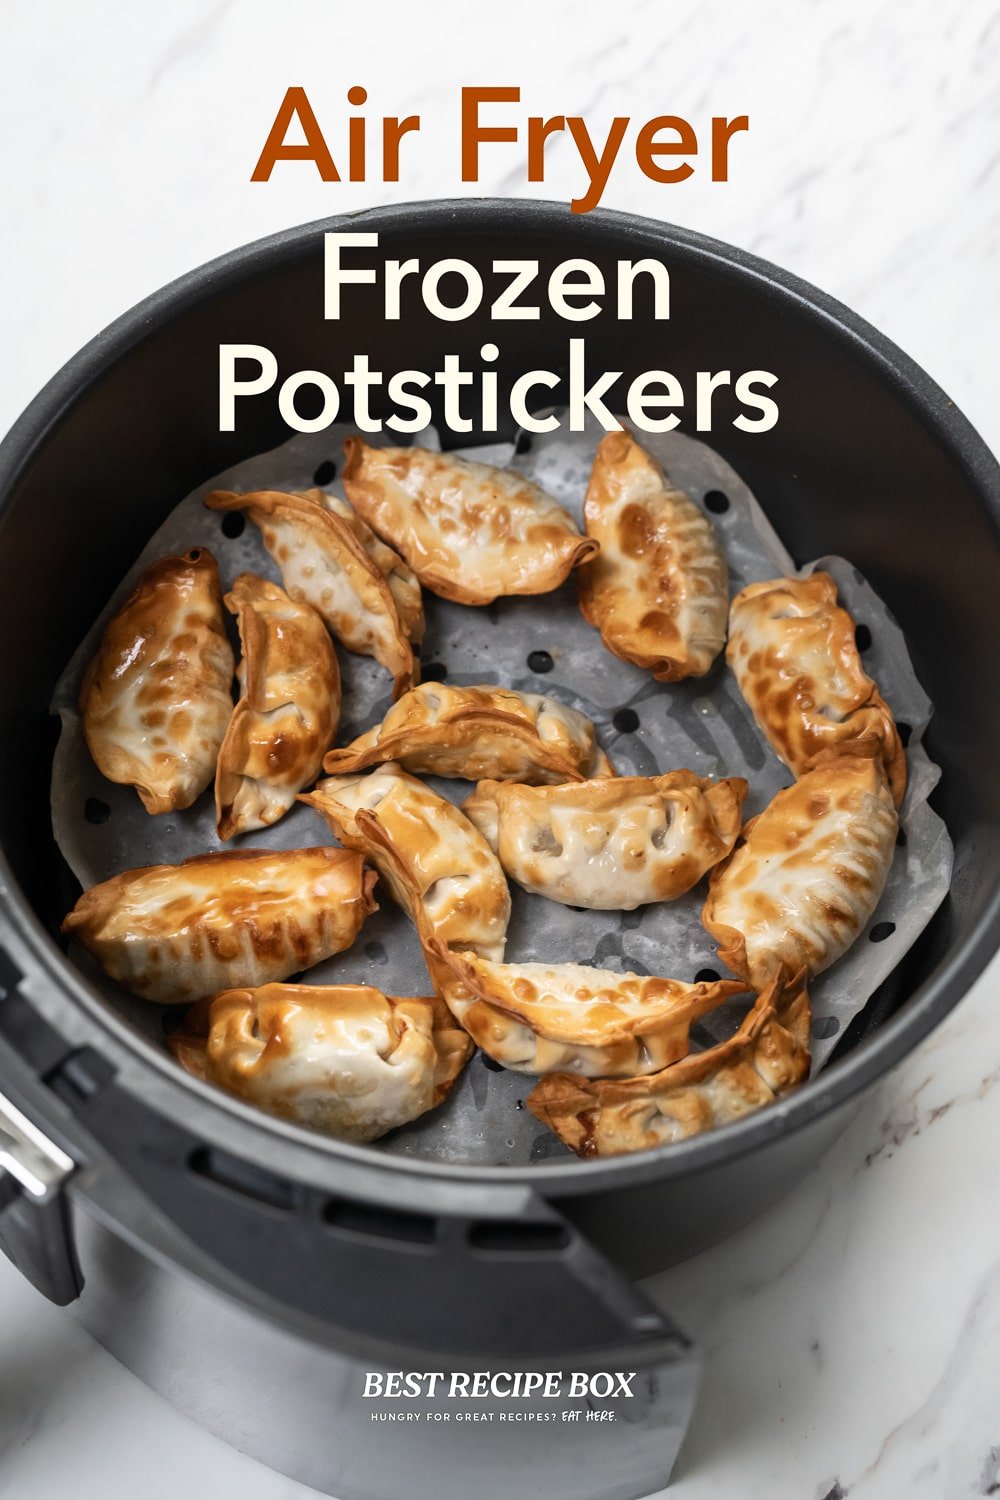 https://bestrecipebox.com/images/Air-Fryer-Frozen-Potstickers-Dumplings-BestRecipeBox-3.jpg